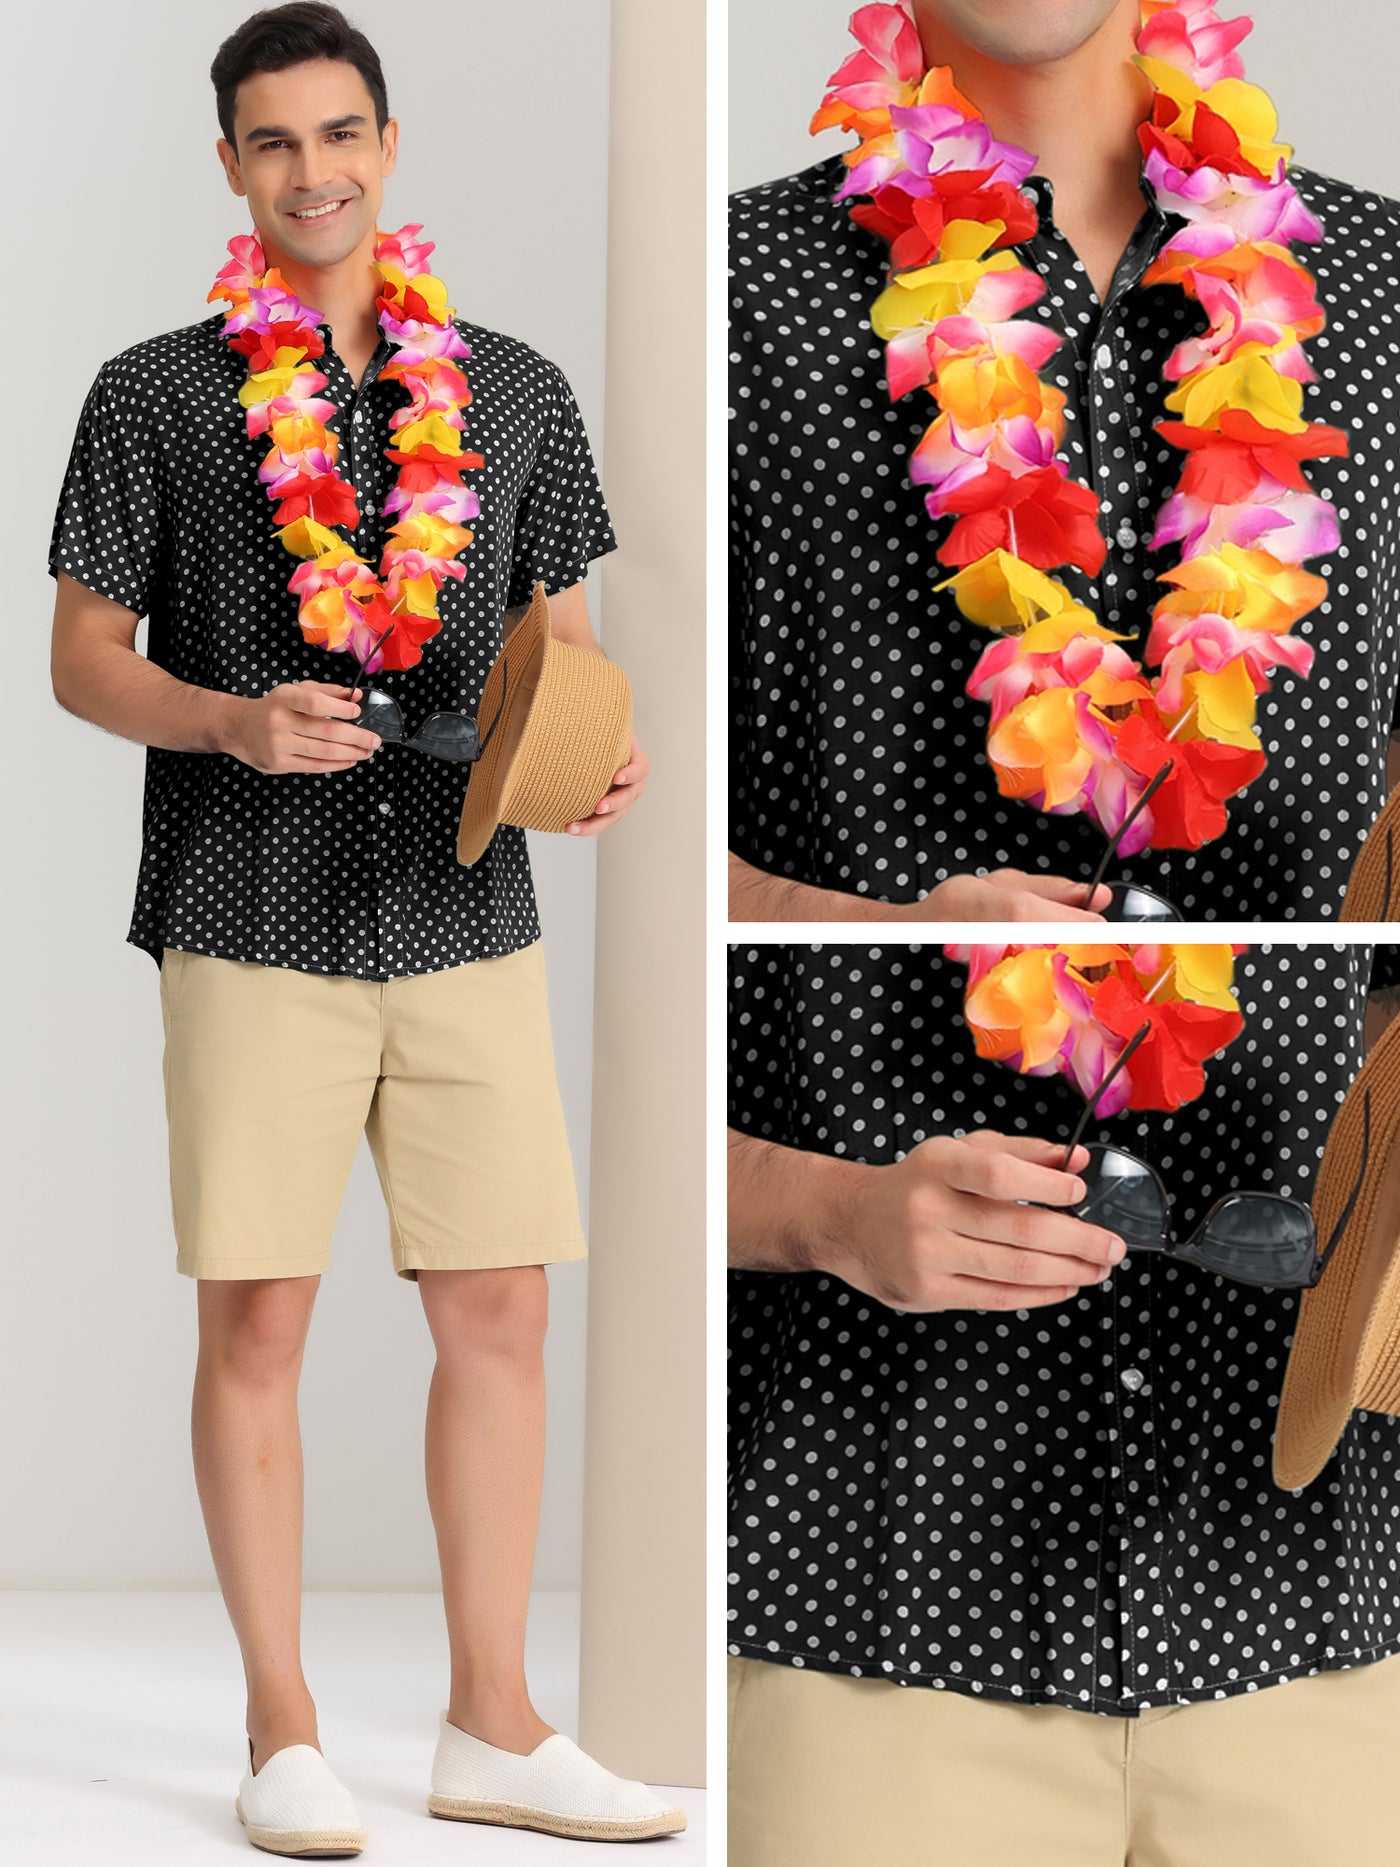 Bublédon Polka Dots Shirts for Men's Short Sleeves Regular Fit Summer Hawaiian Point Shirt